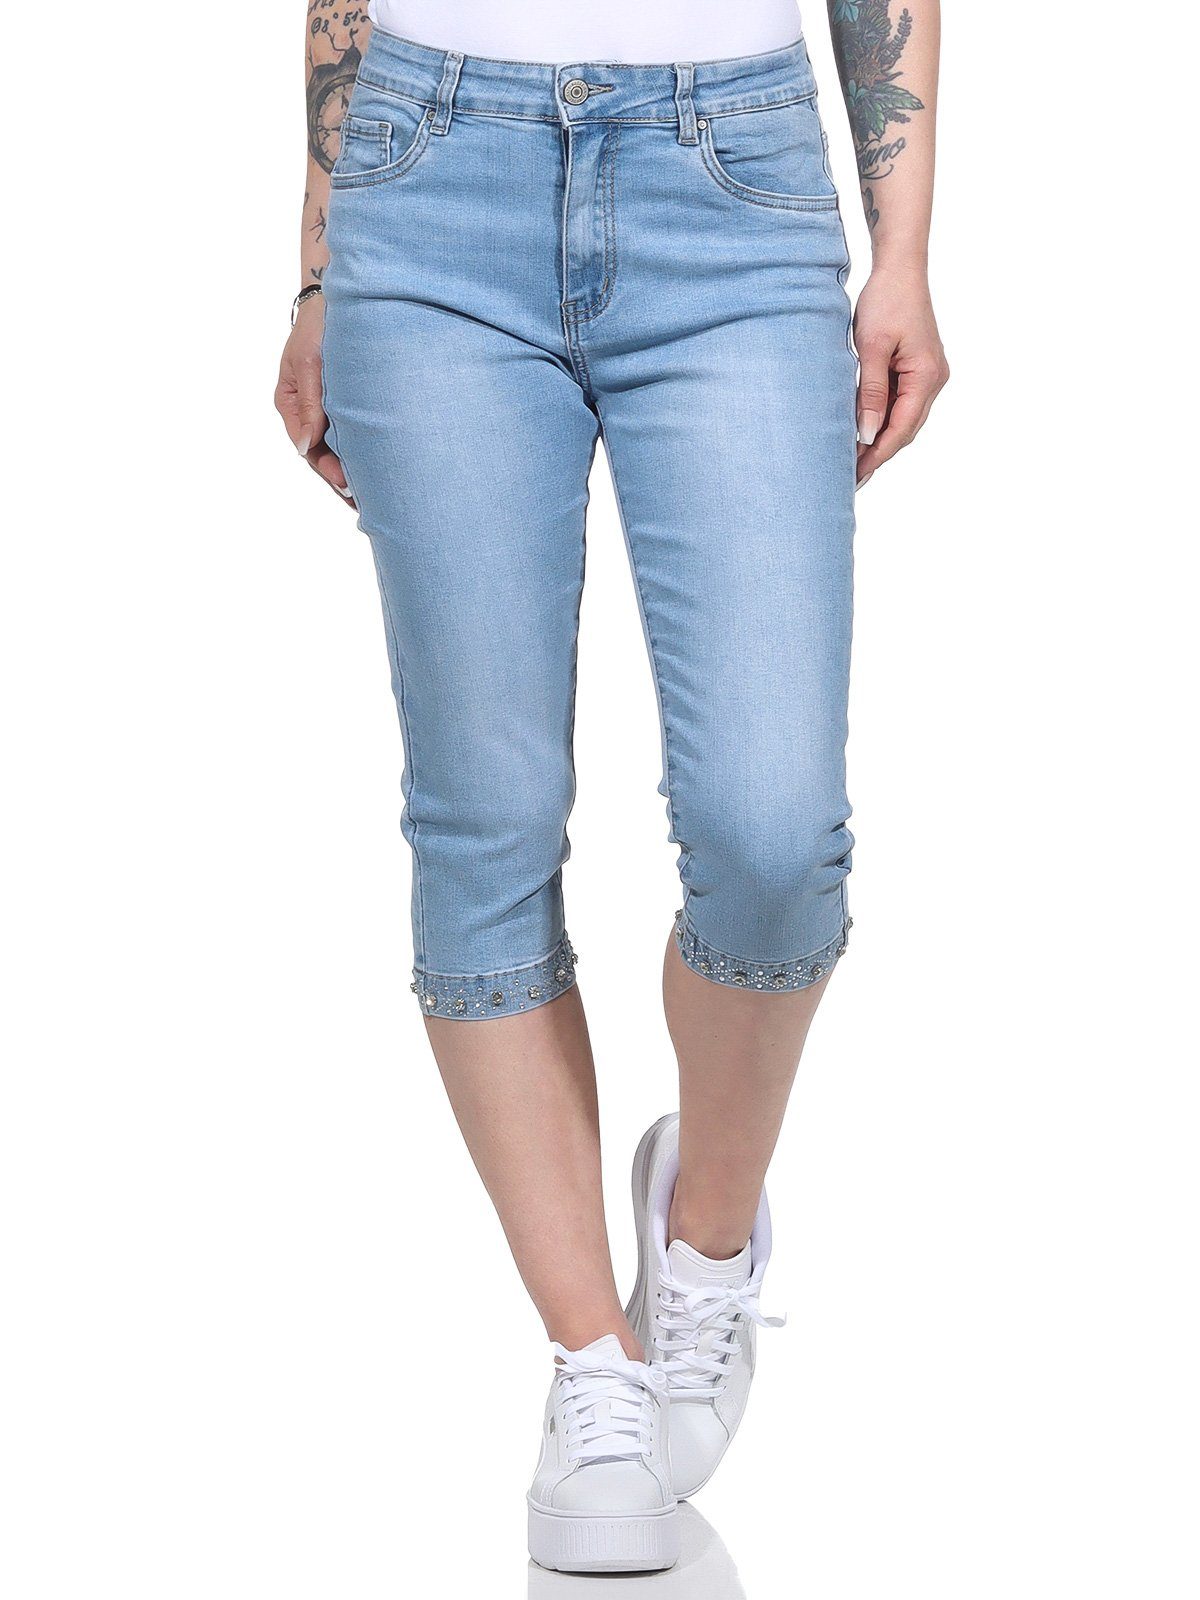 Aurela Damenmode Jeansbermudas Damen Jeans Bermuda kurze Jeanshosen Sommer Caprihosen mit Stretchanteil, 5-Pocket-Style